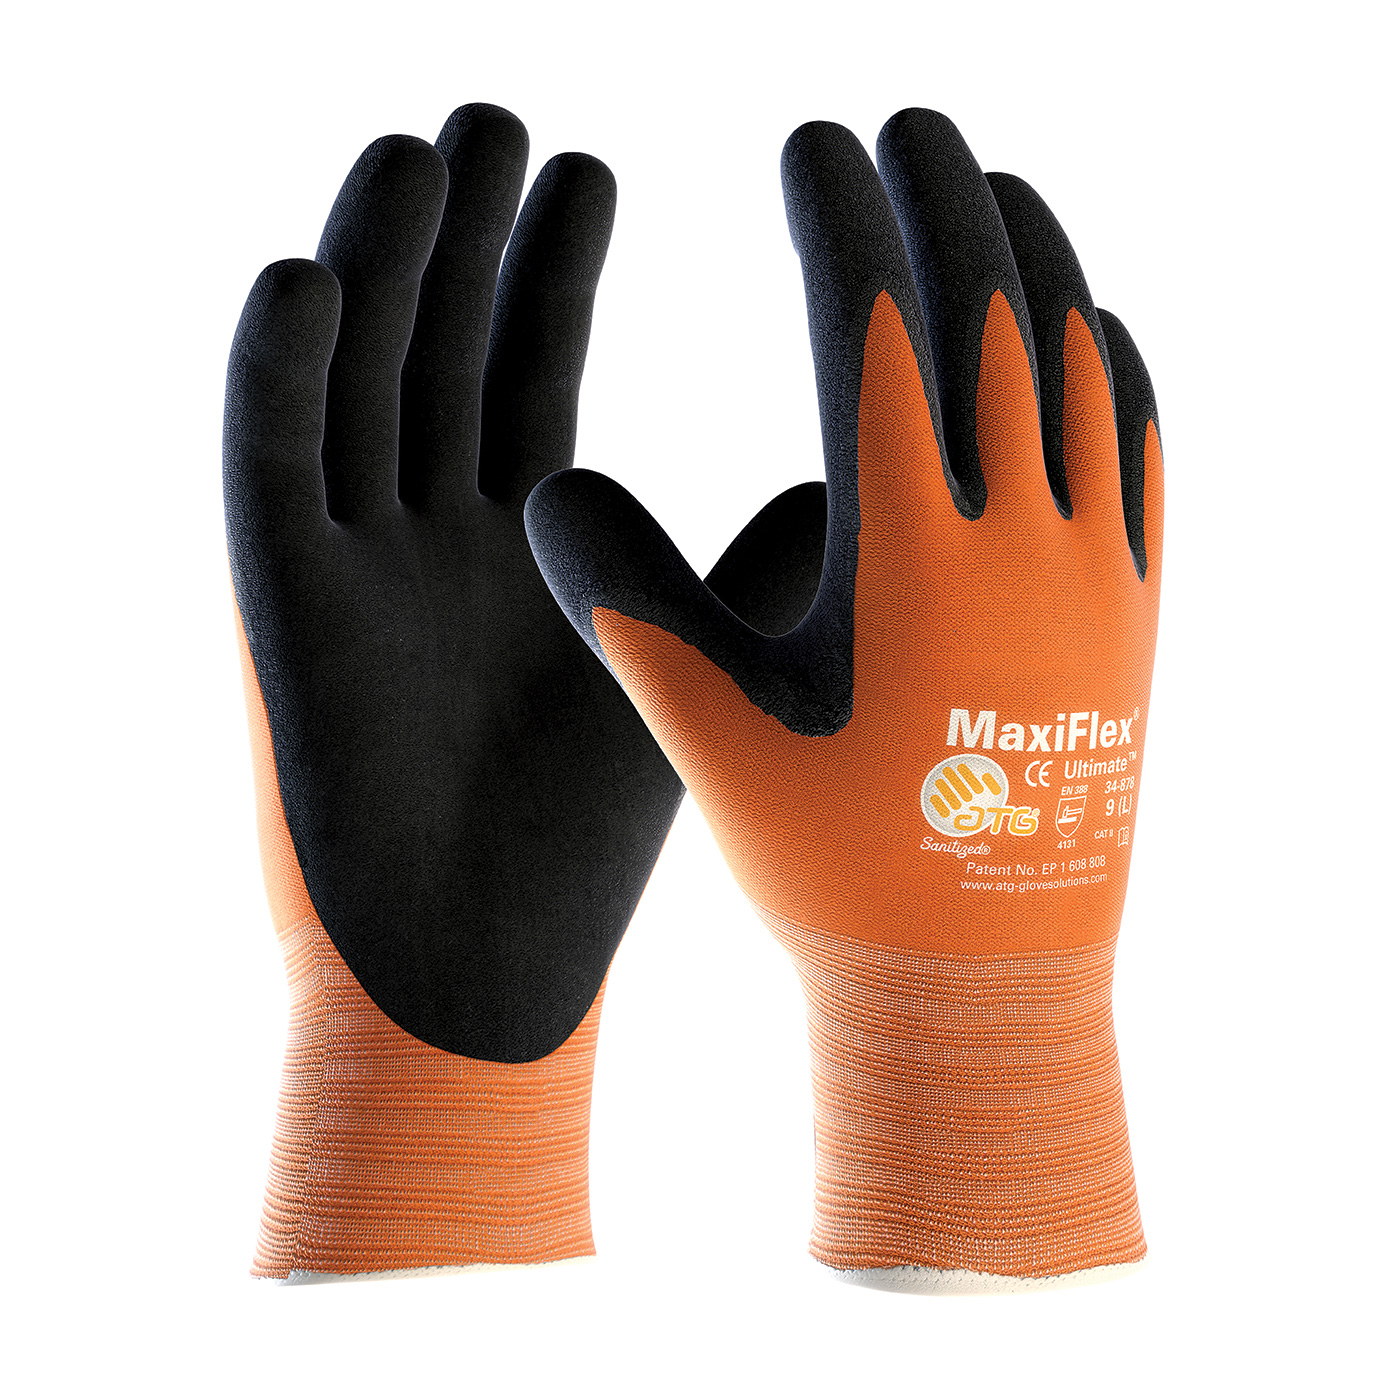 PIP 34-8014/M MaxiFlex Ultimate Hi-Vis Seamless Knit Nylon Glove with Nitrile Coated MicroFoam Grip on Palm & Fingers - Medium PID-34 8014 M